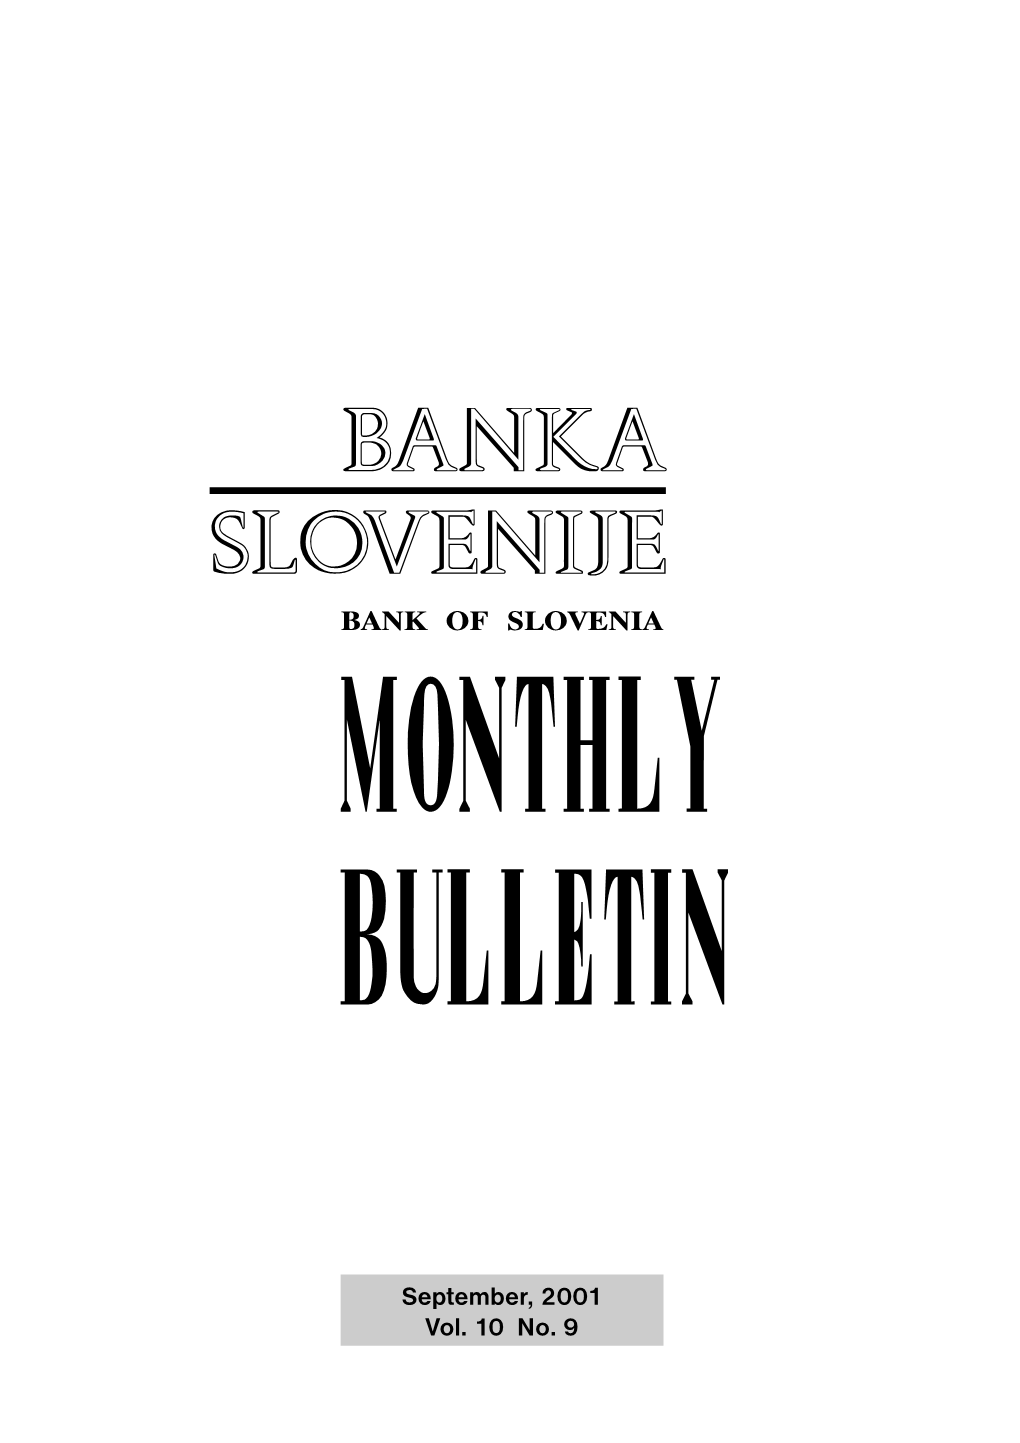 Banka Slovenije Bank of Slovenia Monthly Bulletin